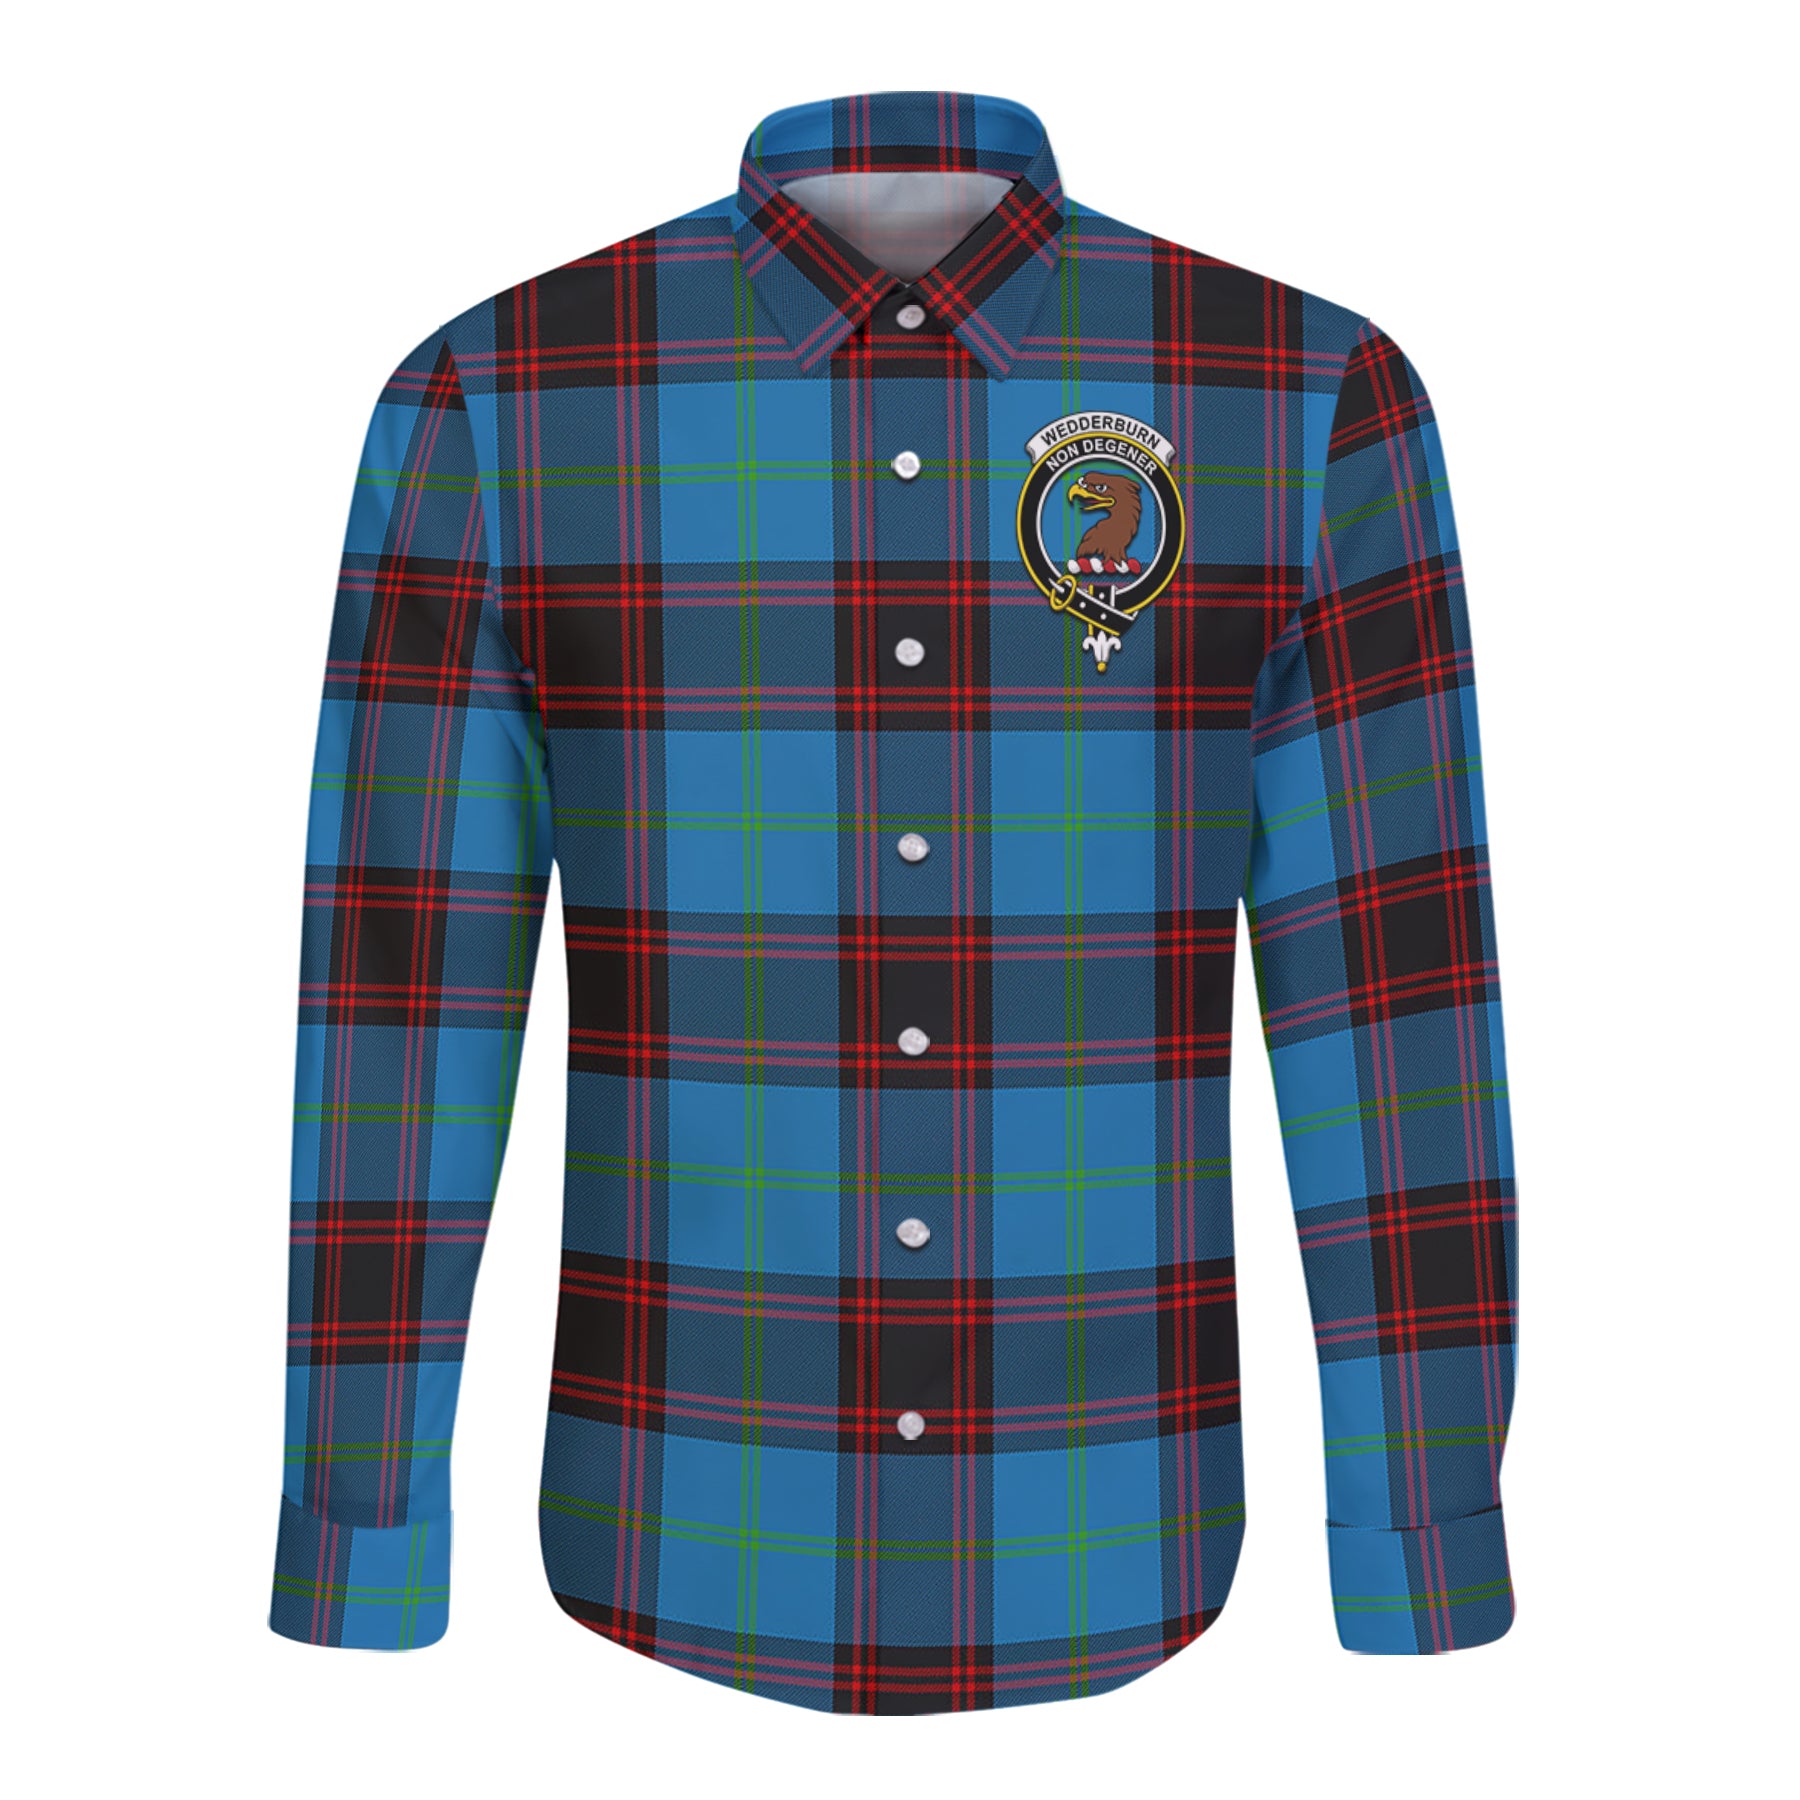 Wedderburn Tartan Long Sleeve Button Up Shirt with Scottish Family Crest K23